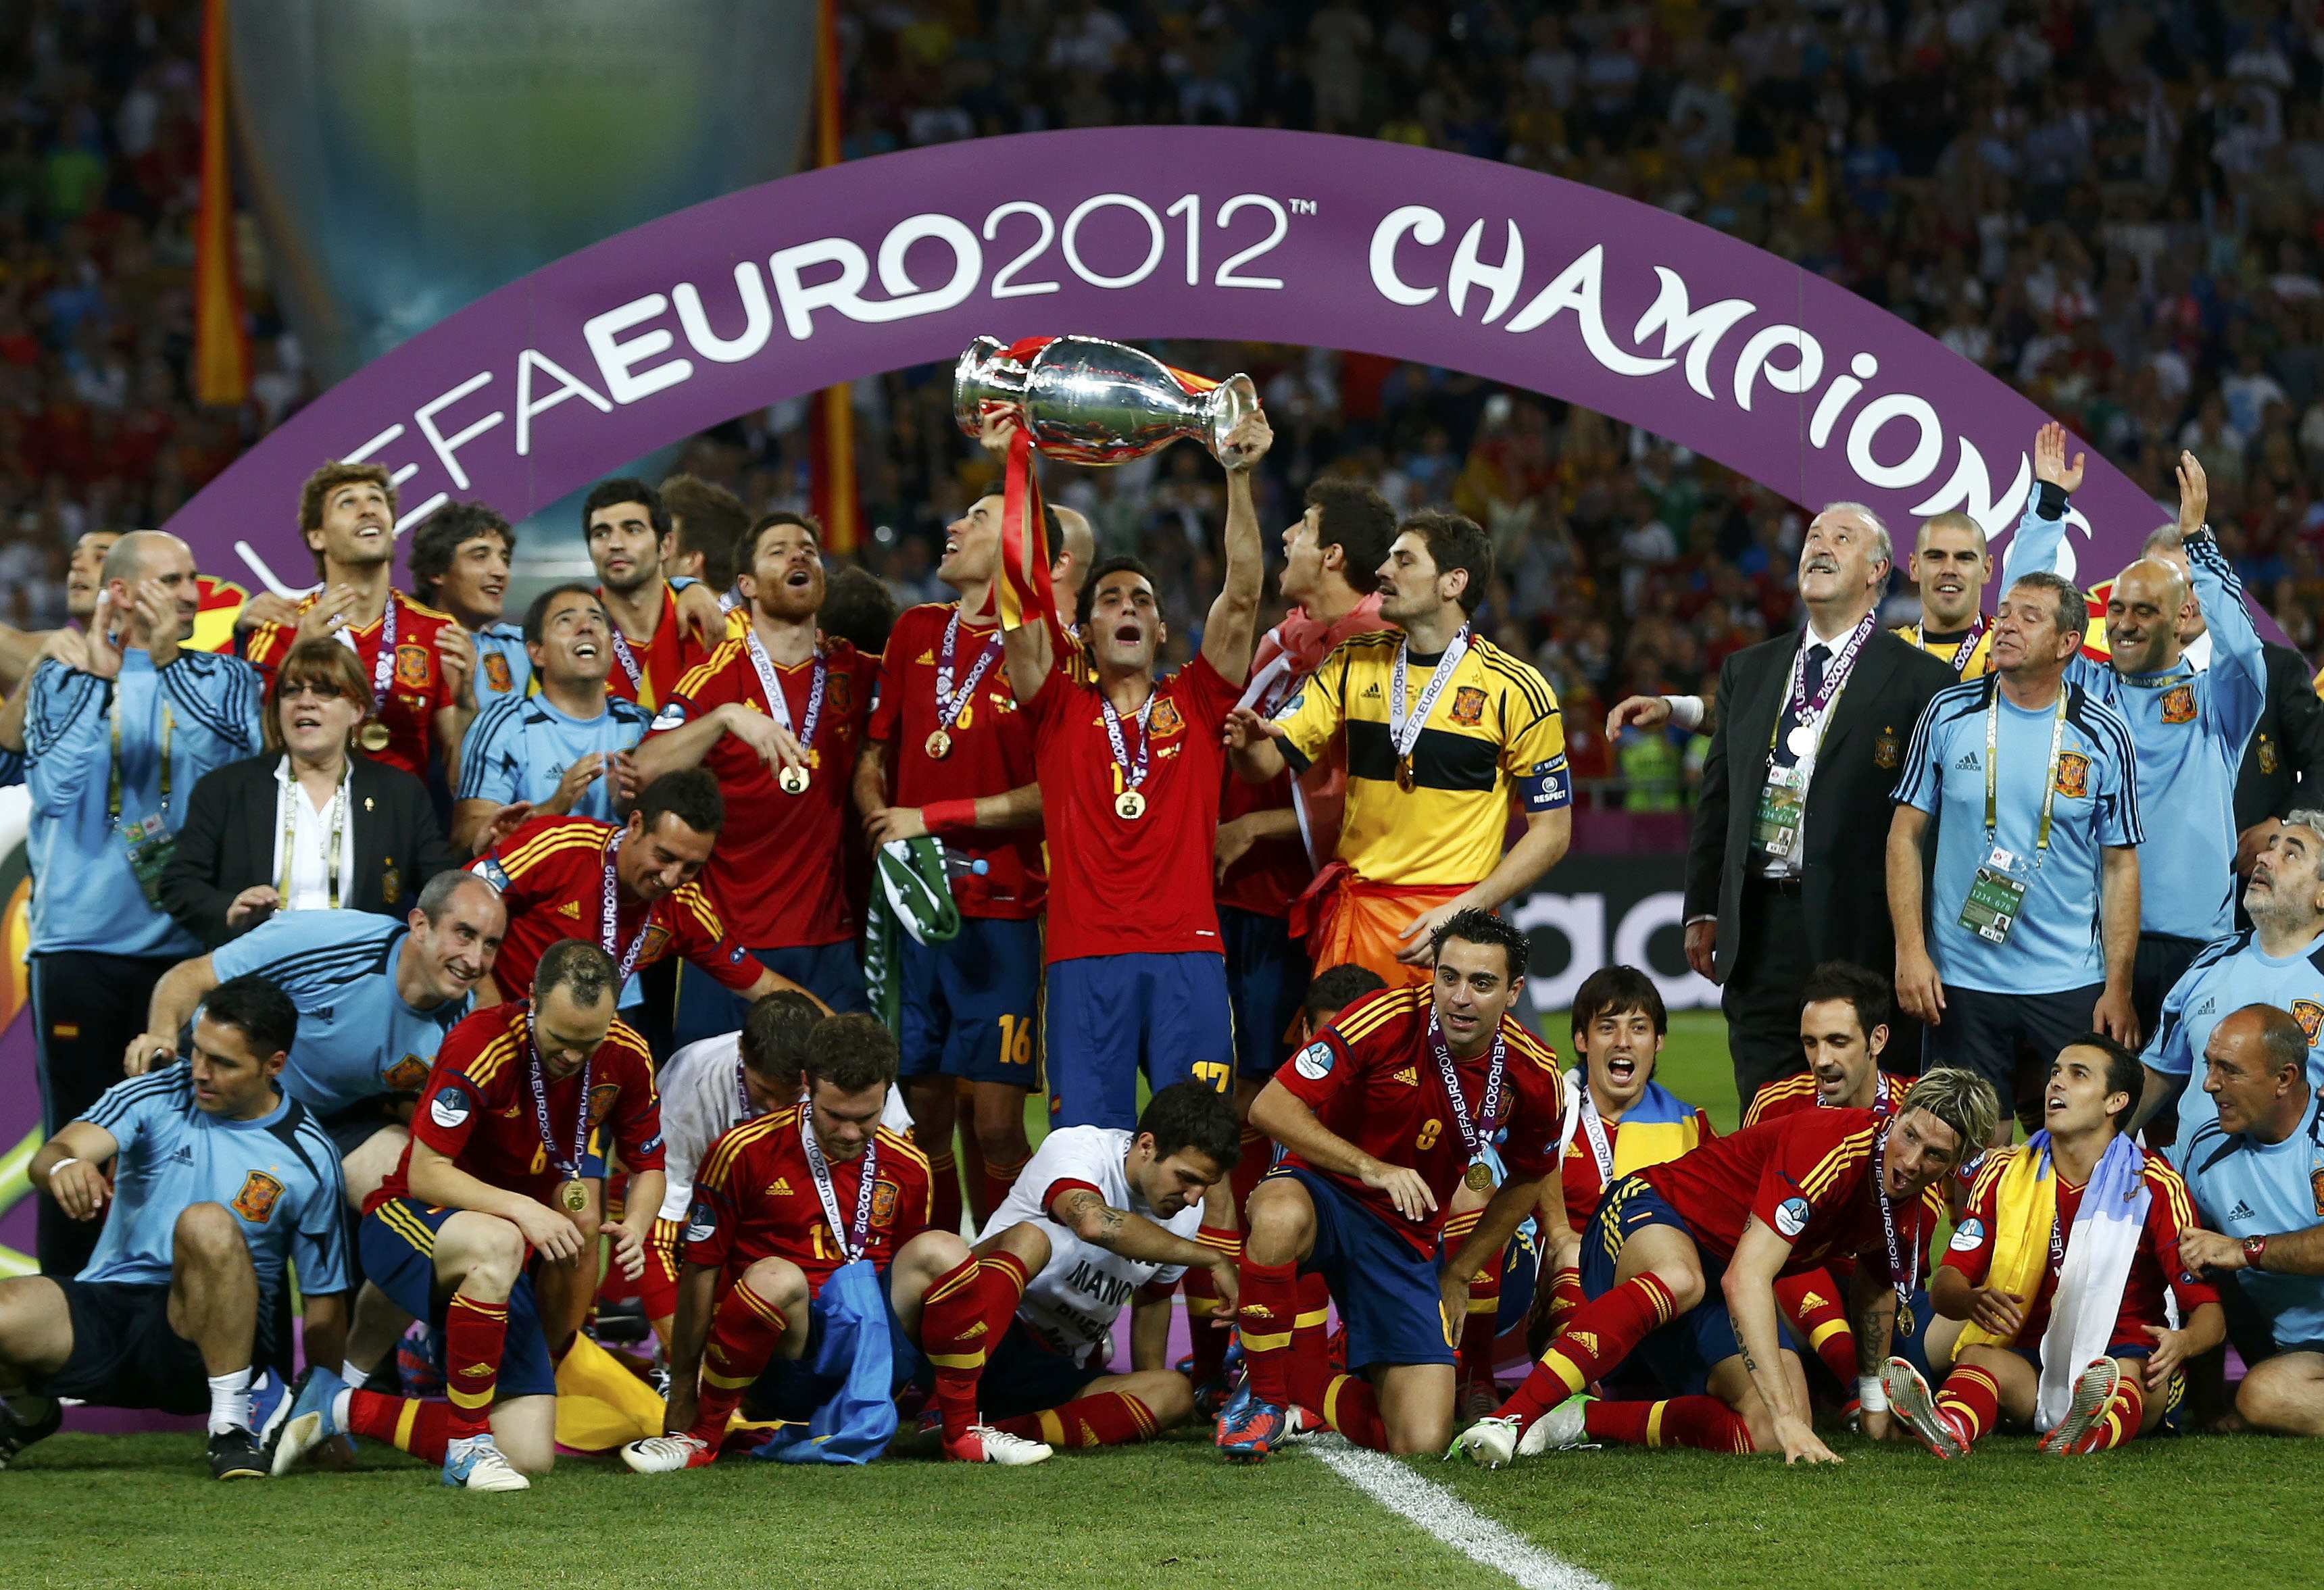 Кубок футбола 2012. Сборная Испании чемпион евро 2012. Сборная Испании 2008-2012. Испания 2012 финал. UEFA Euro 2012, евро 2012.